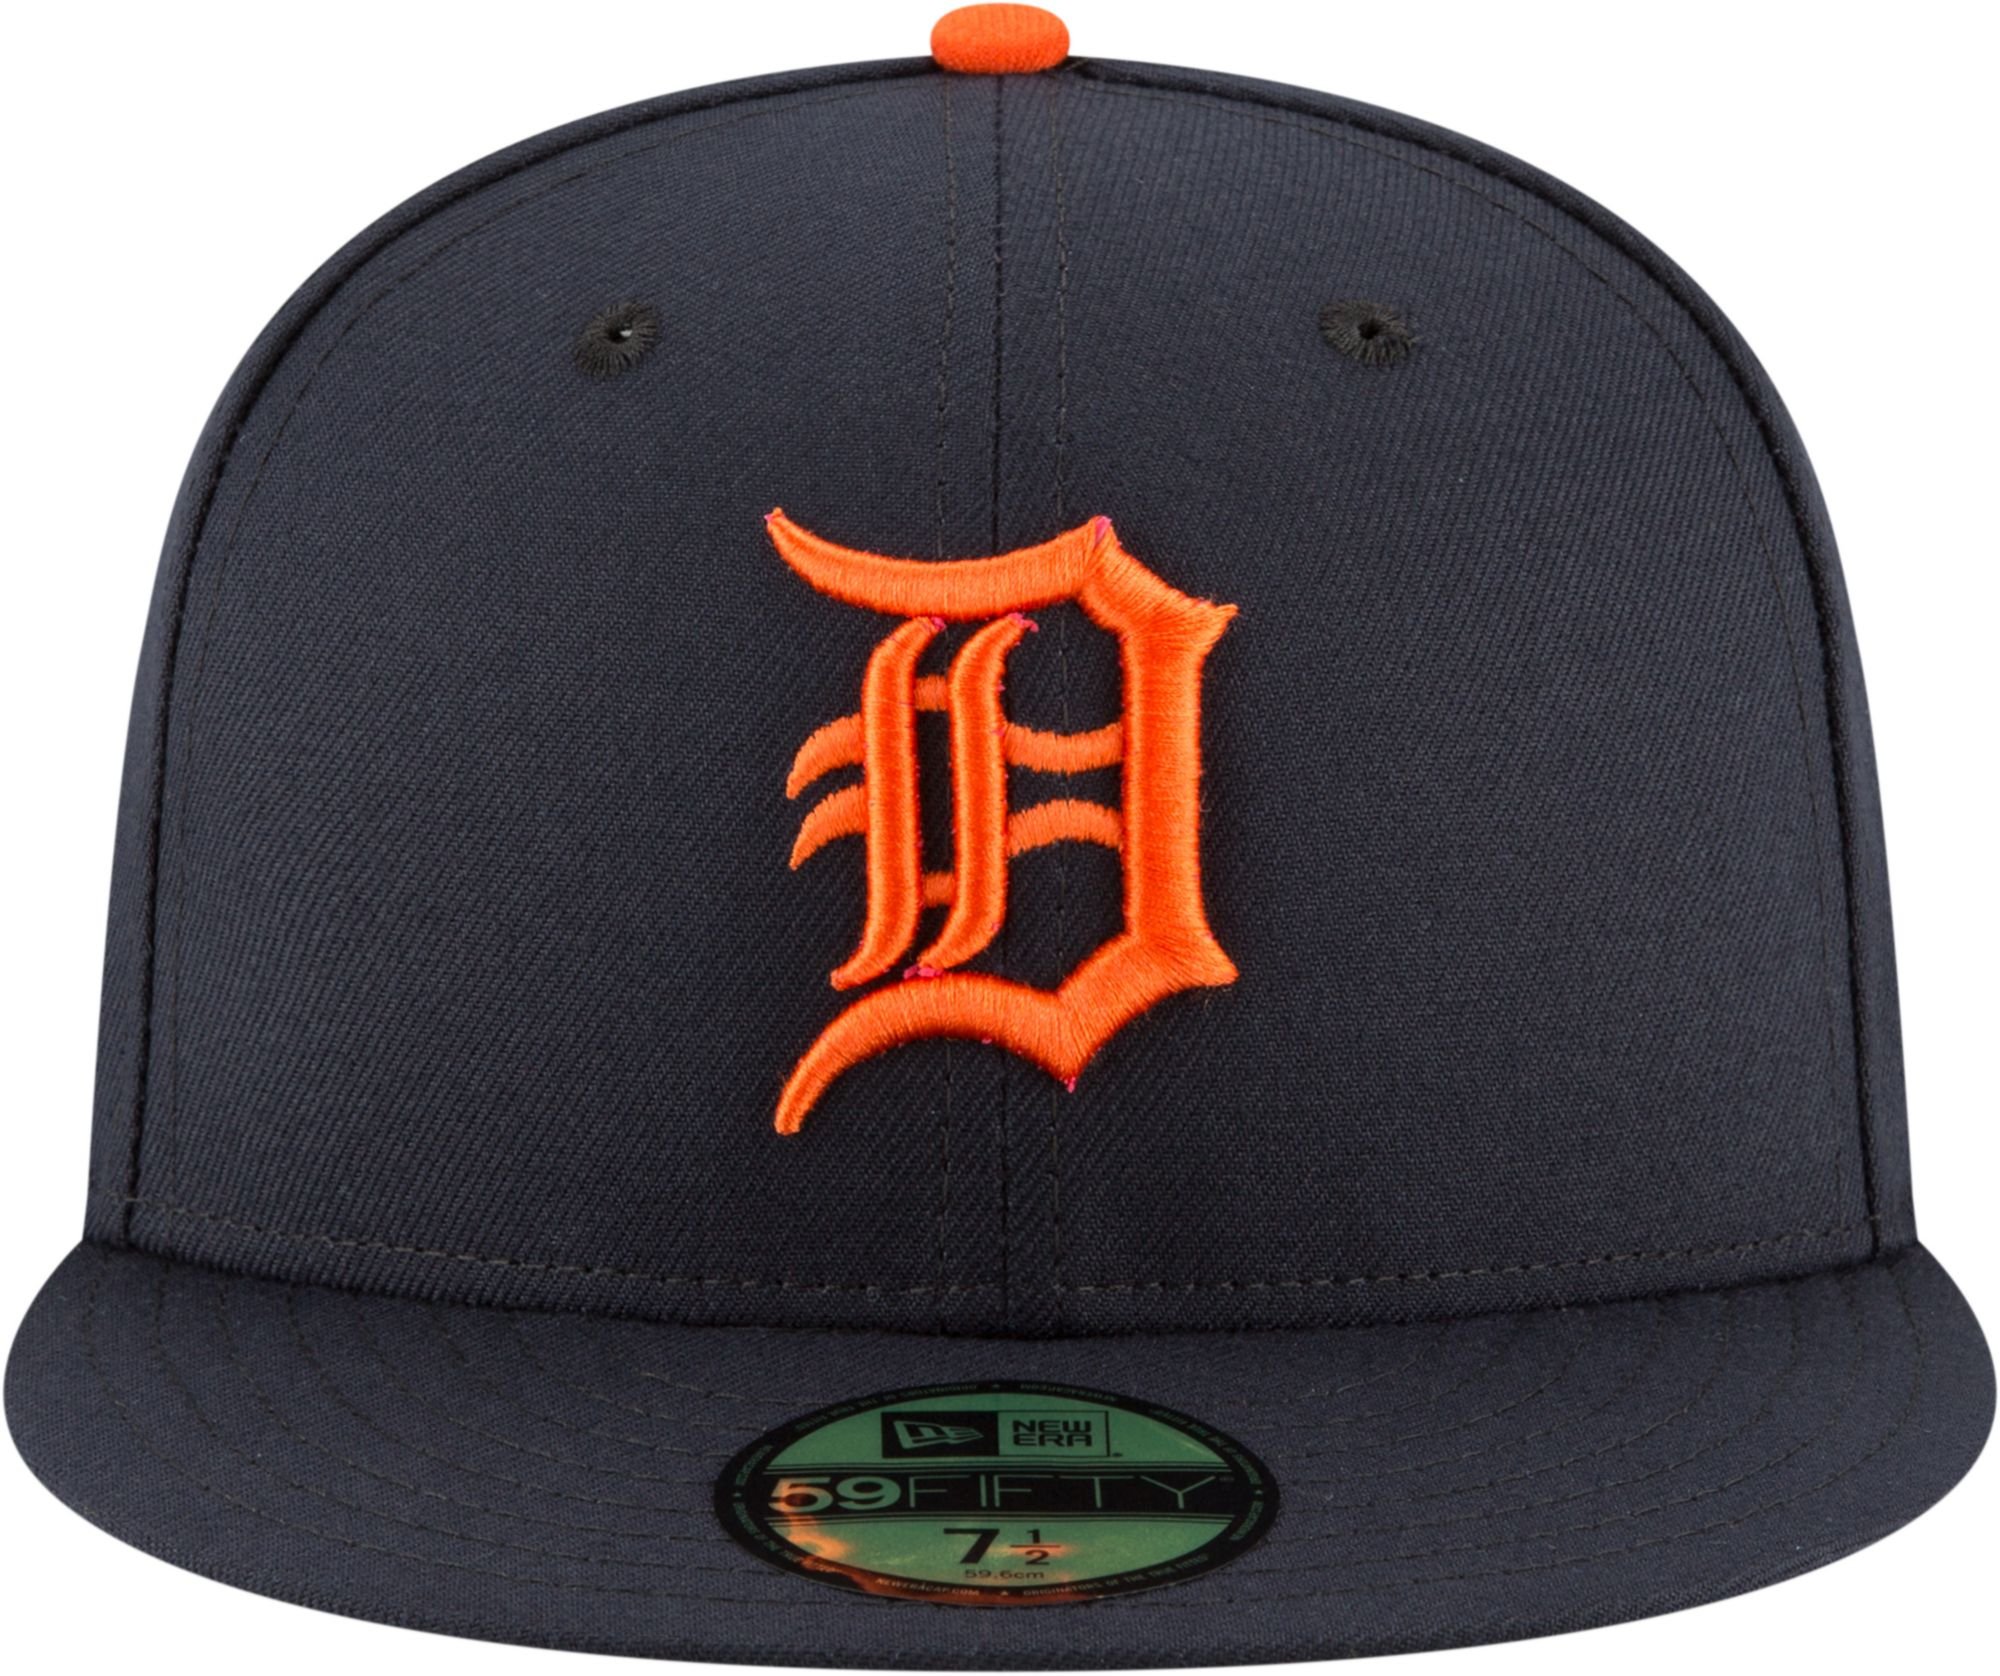 New Era Detroit Tigers Fitted Hat MLB Basic Black White Logo Cap Size 7 78   eBay